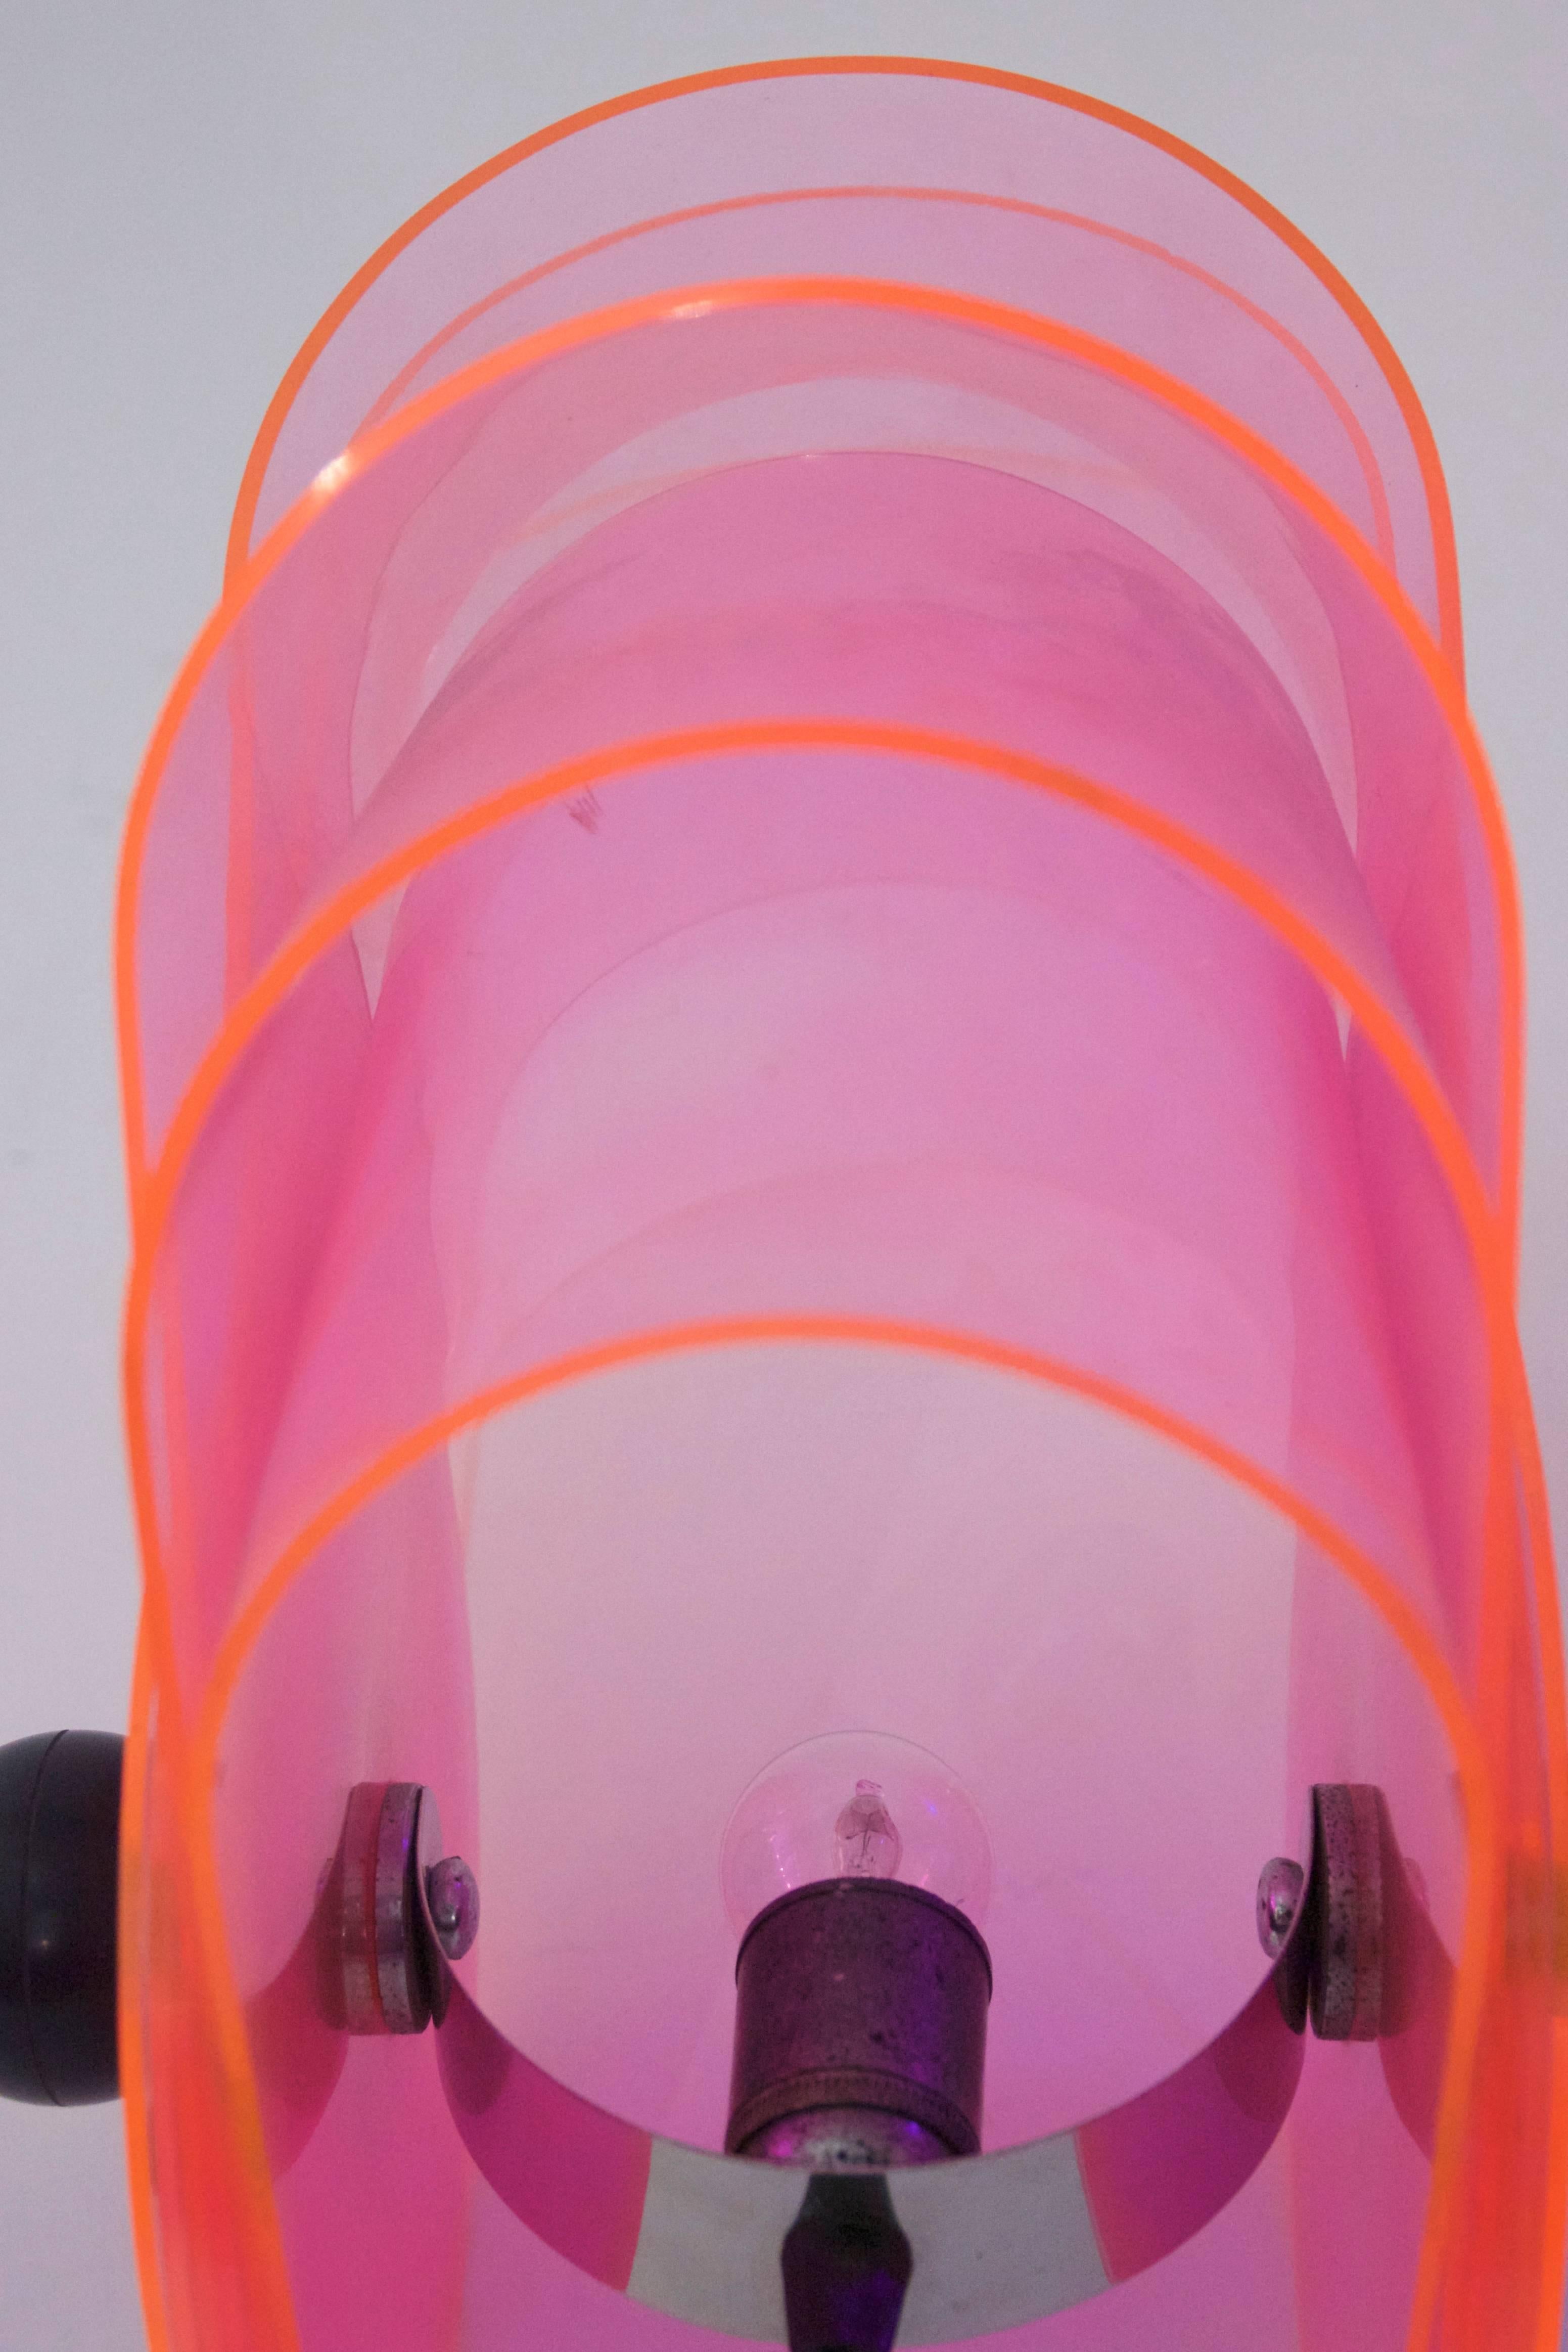 Metal Superstudio Table Lamp, Gherpe Model, Francesconi Production, Poltronova Design